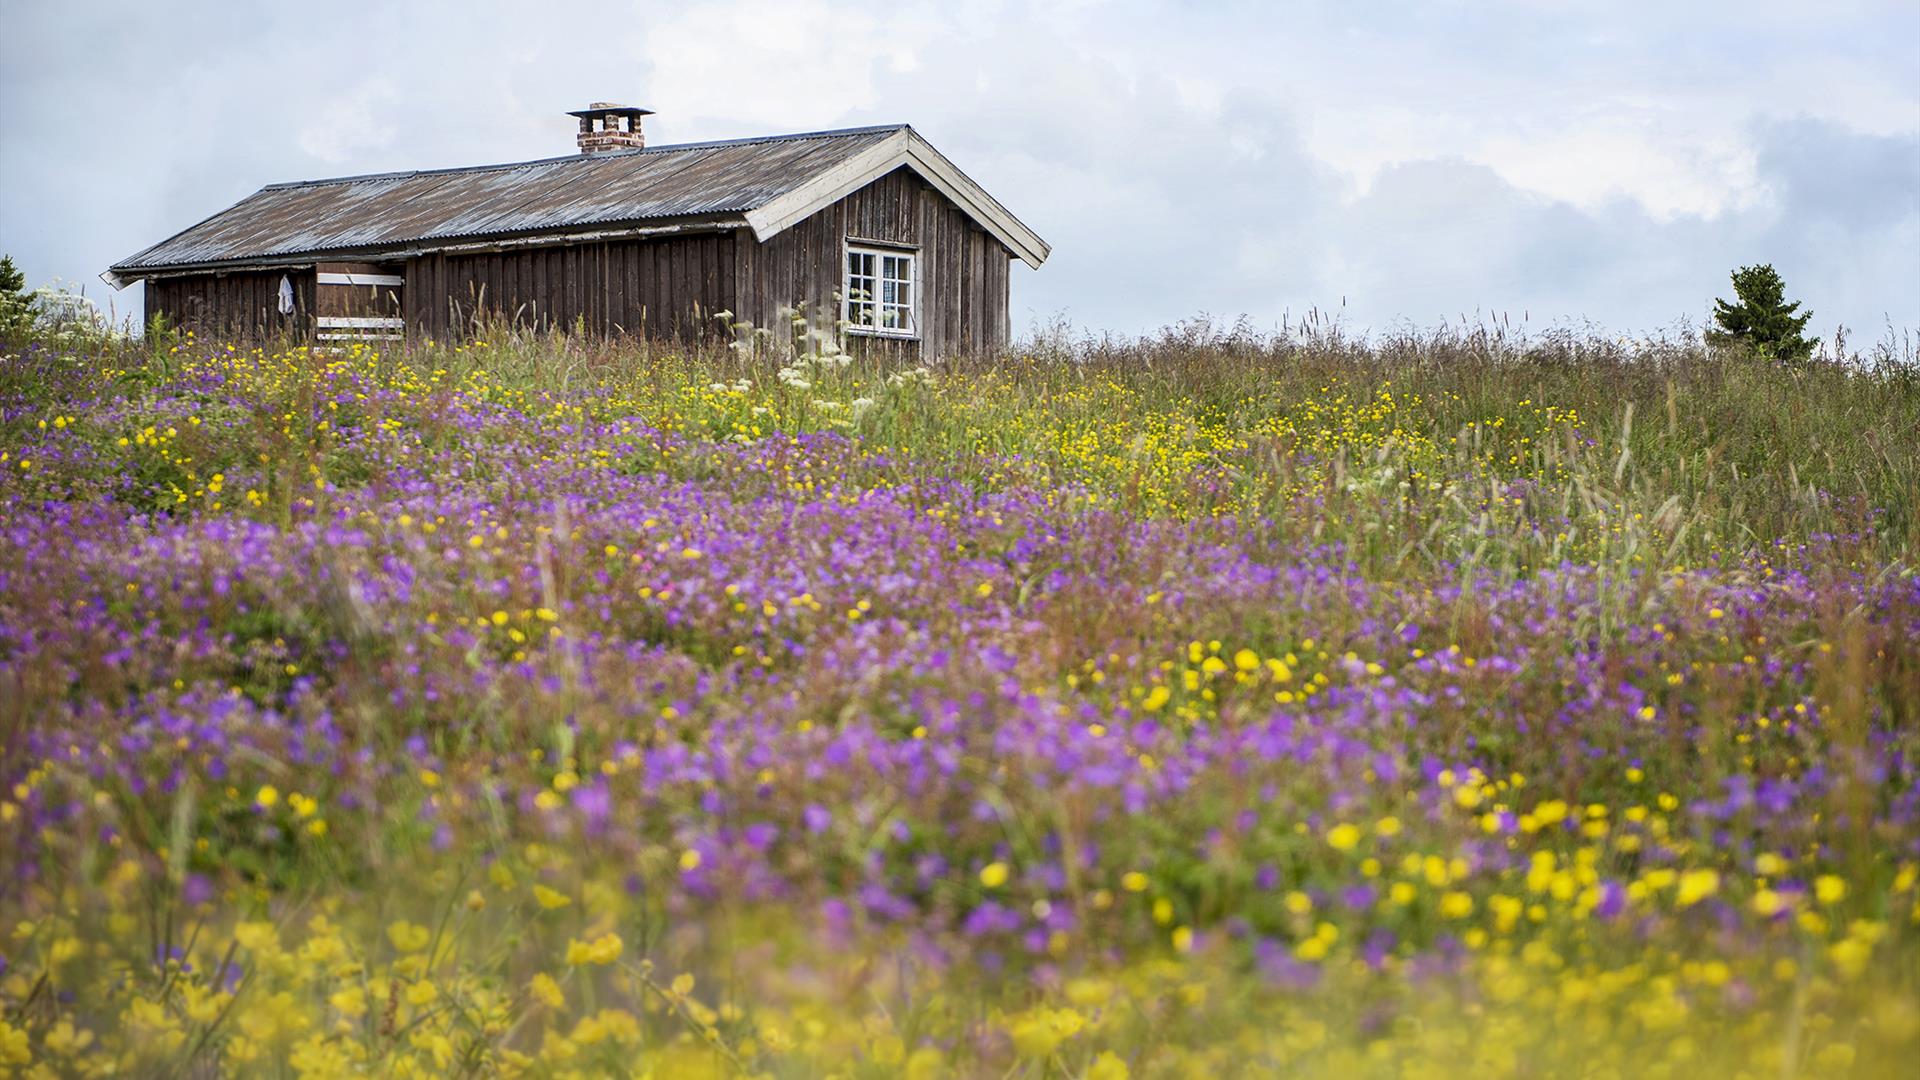 The summer farm of Lykkjesetra and its flower meadow. Venabu Fjellhotell